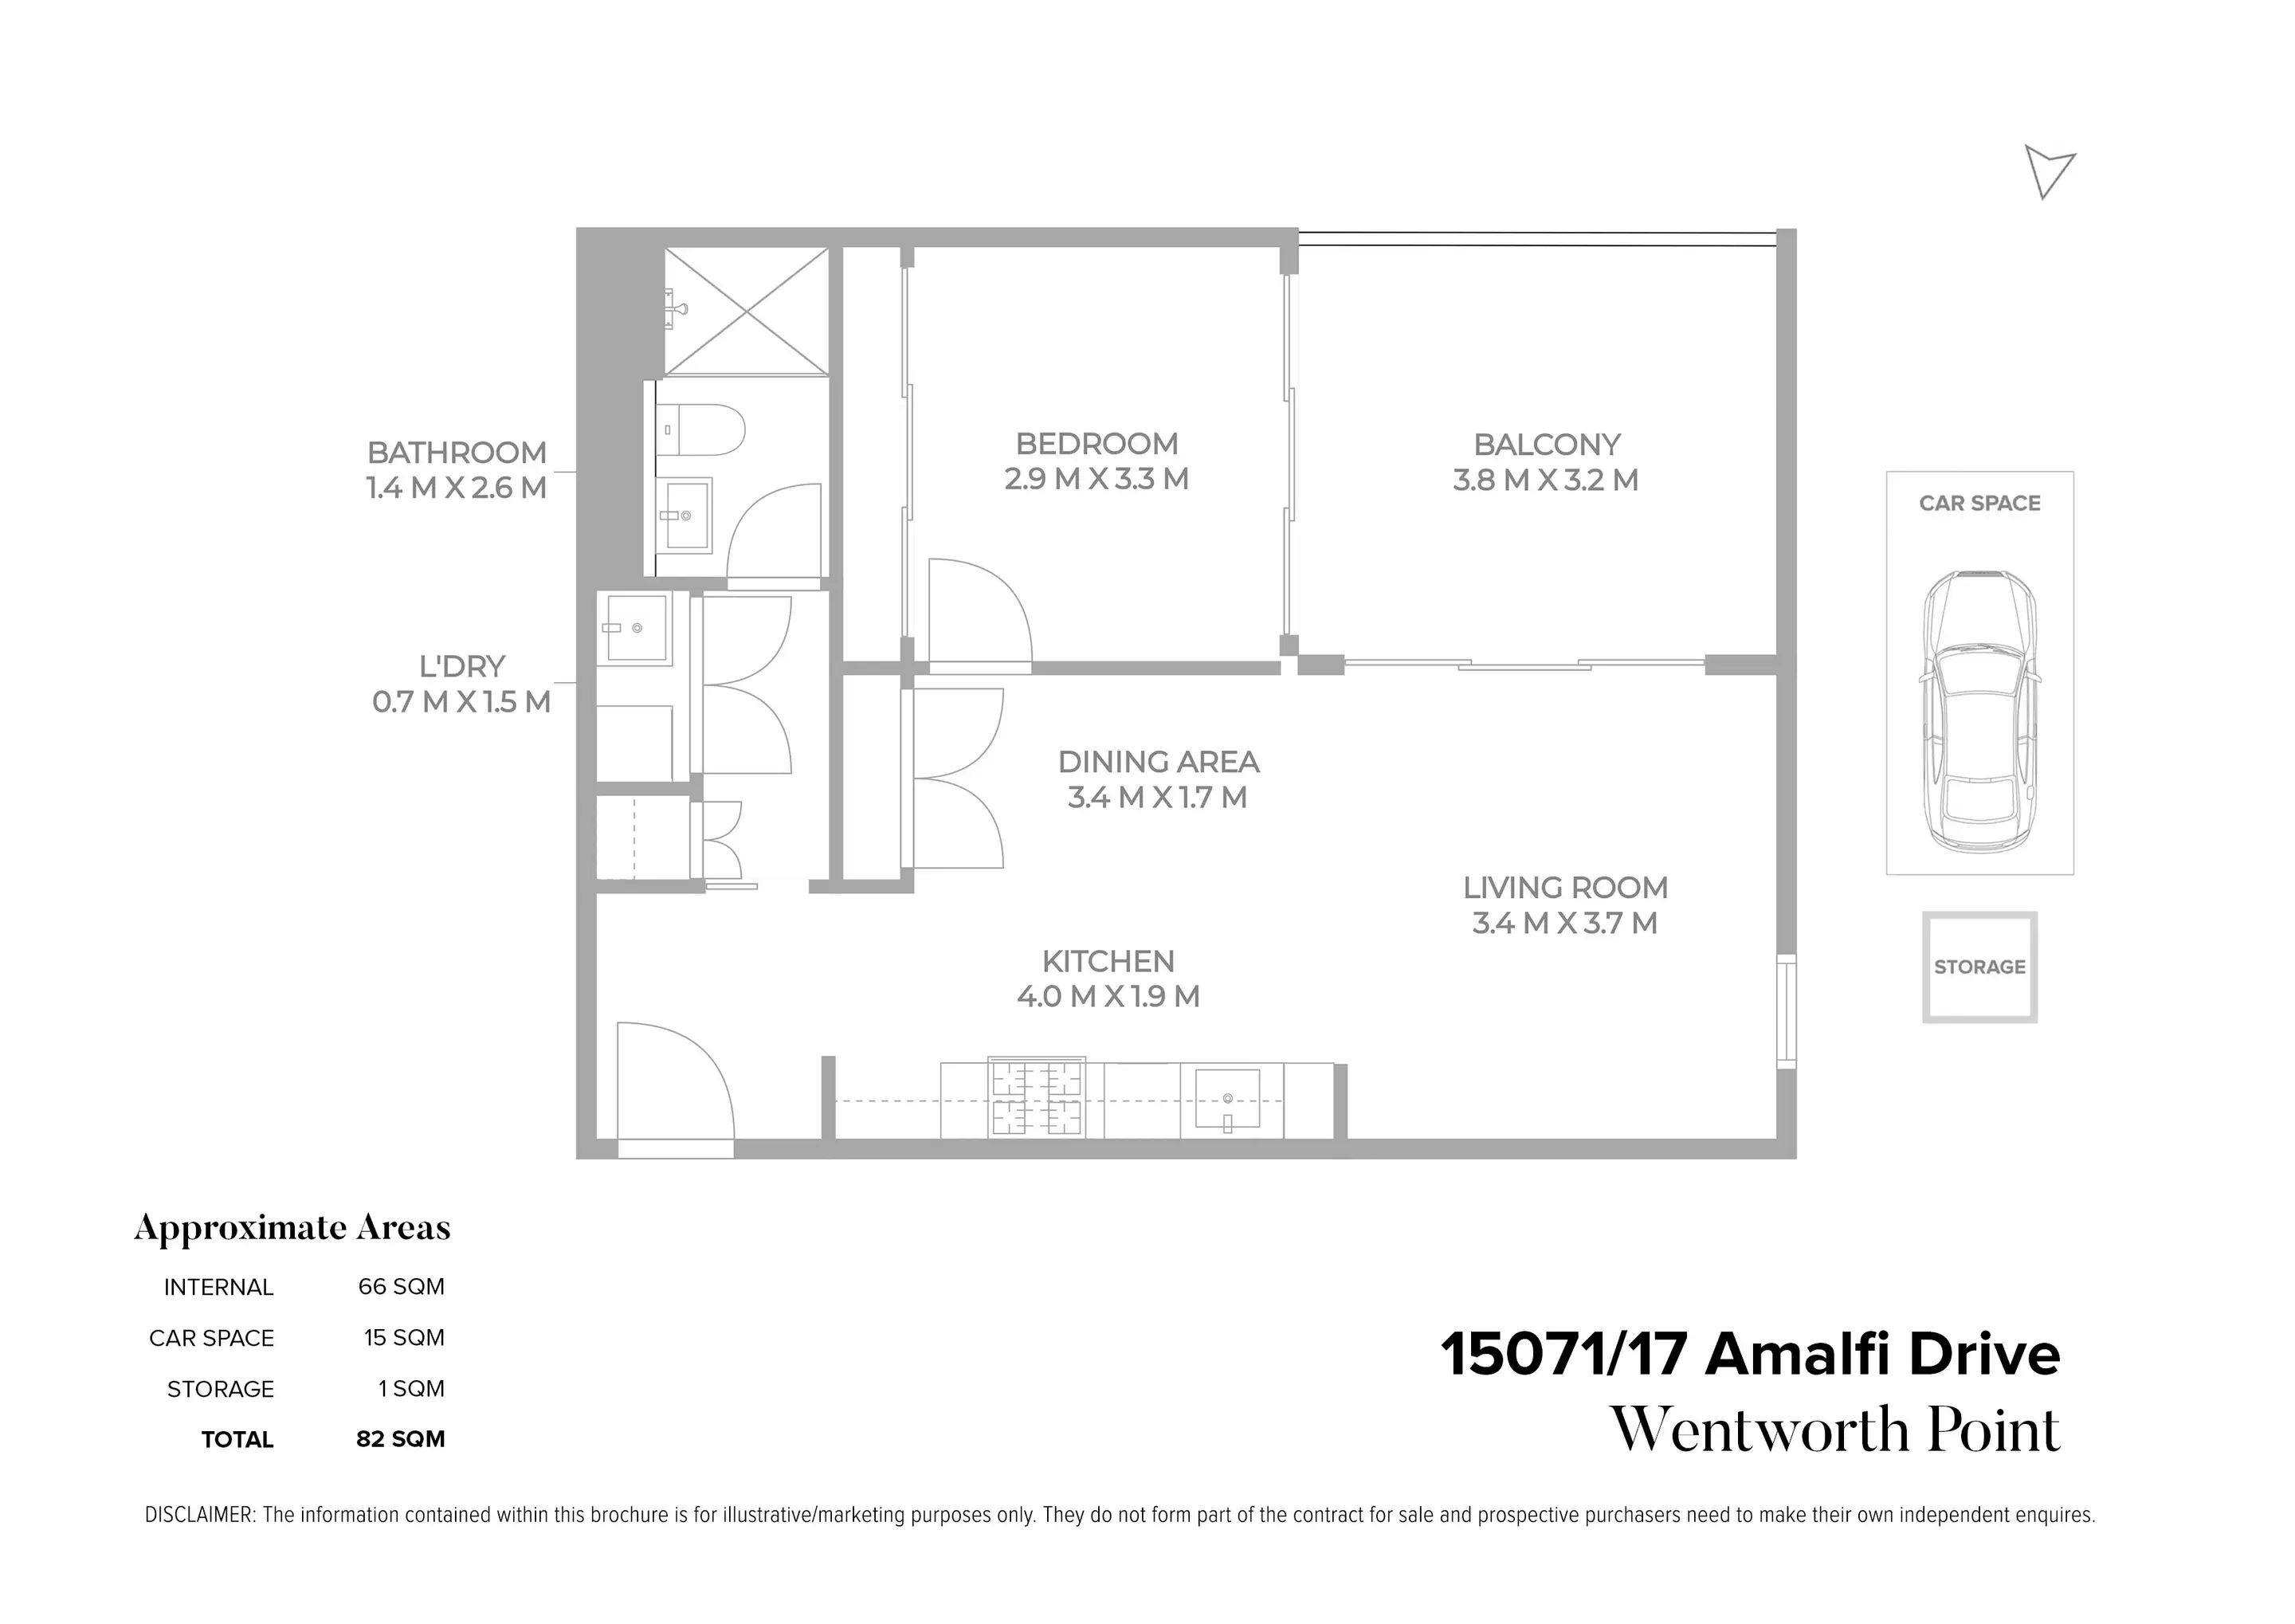 15071/17 Amalfi Drive, Wentworth Point For Sale by Chidiac Realty - floorplan